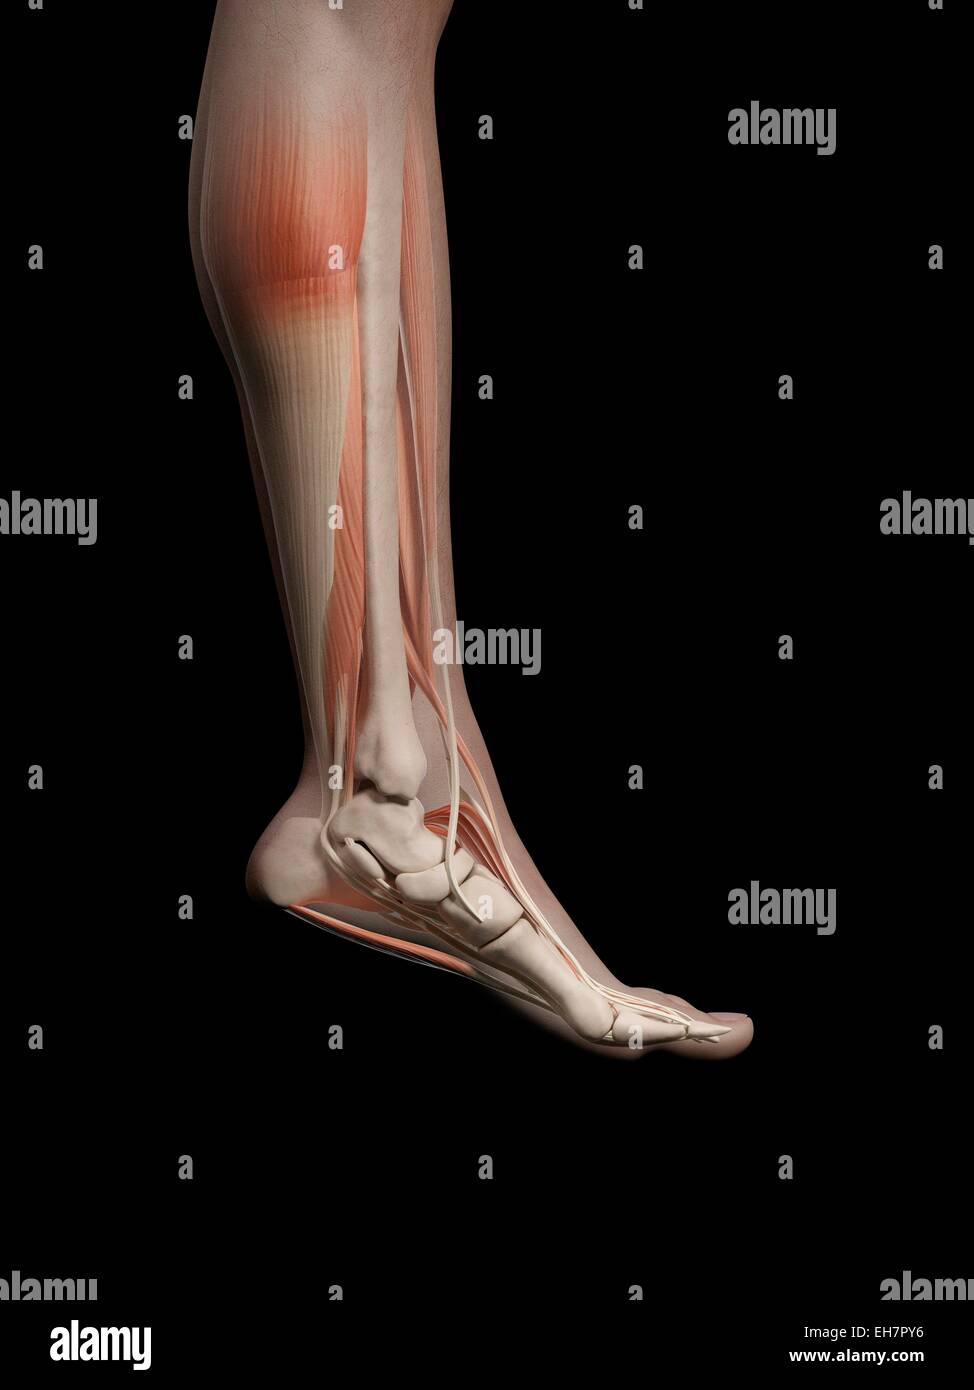 Human leg and foot anatomy, illustration Stock Photo